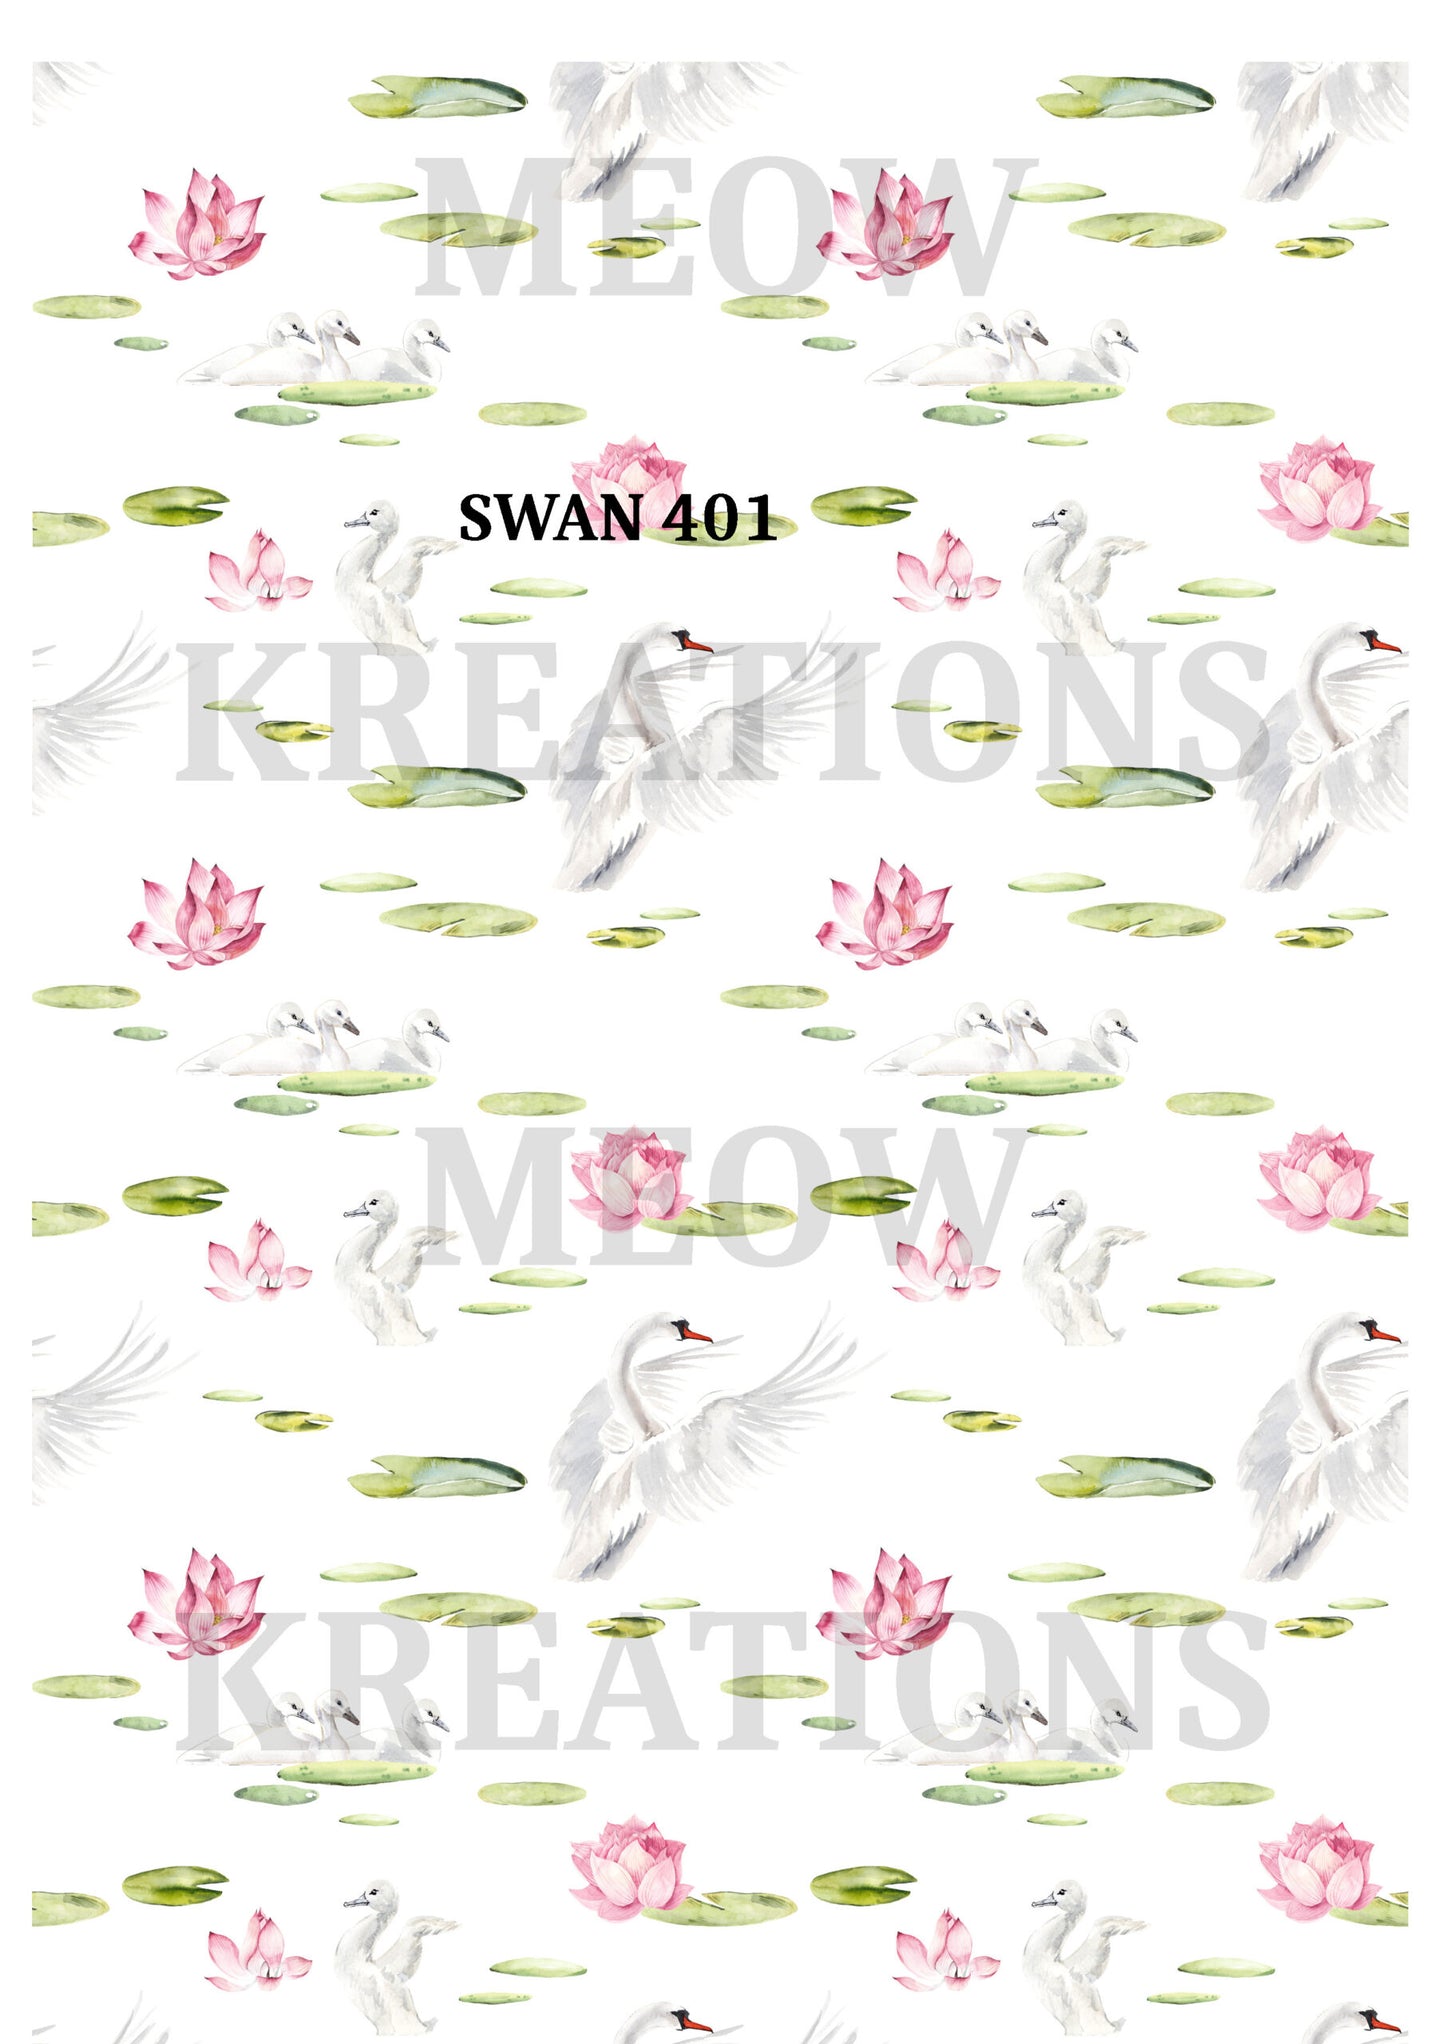 SWAN 401